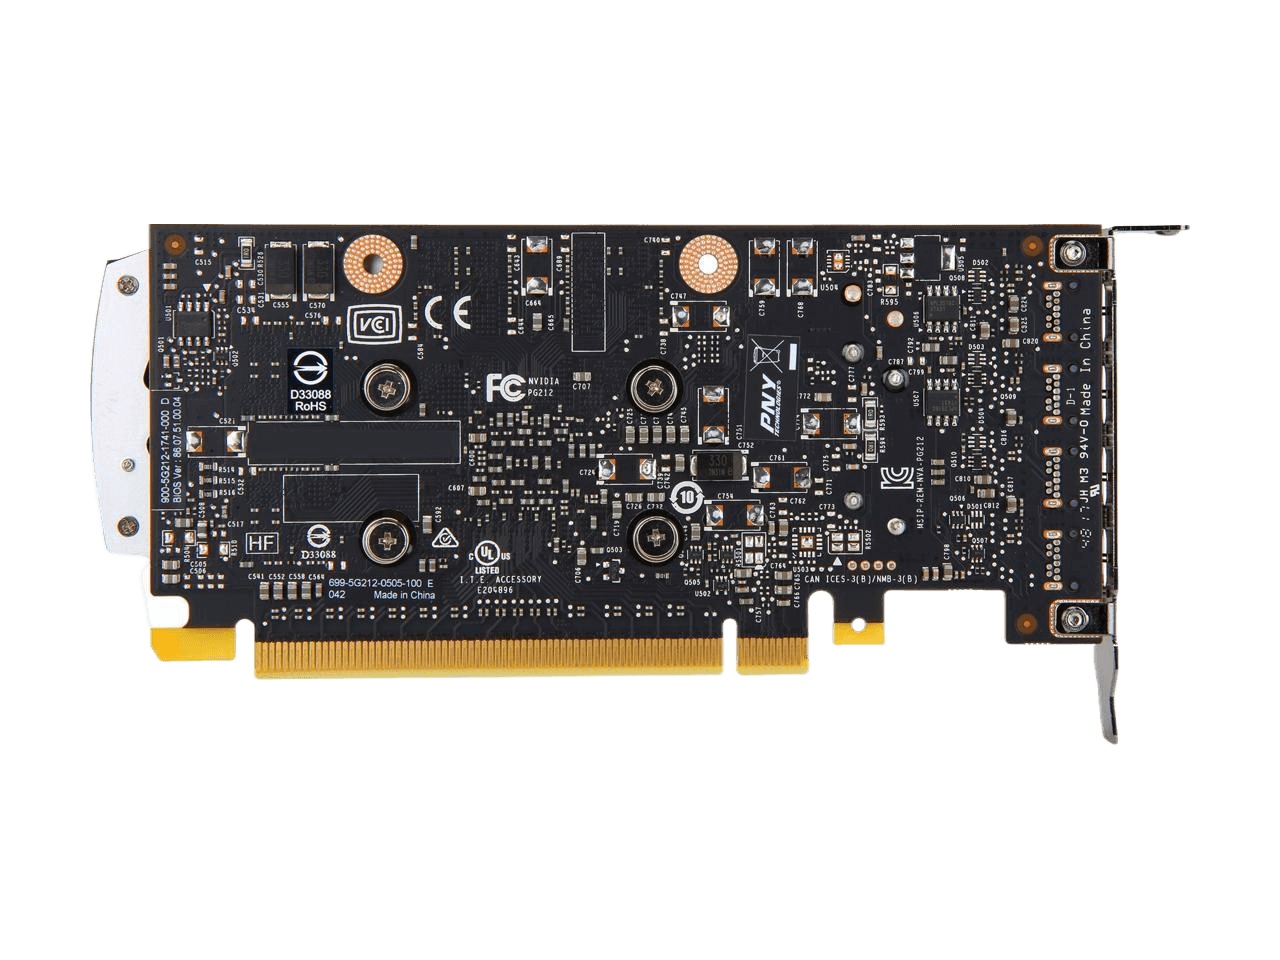 PNY NVIDIA Quadro P620 VGA 2GB 128-bit GDDR5 PCI Express 3.0 x16 Video Card Workstation VCQP620-PB